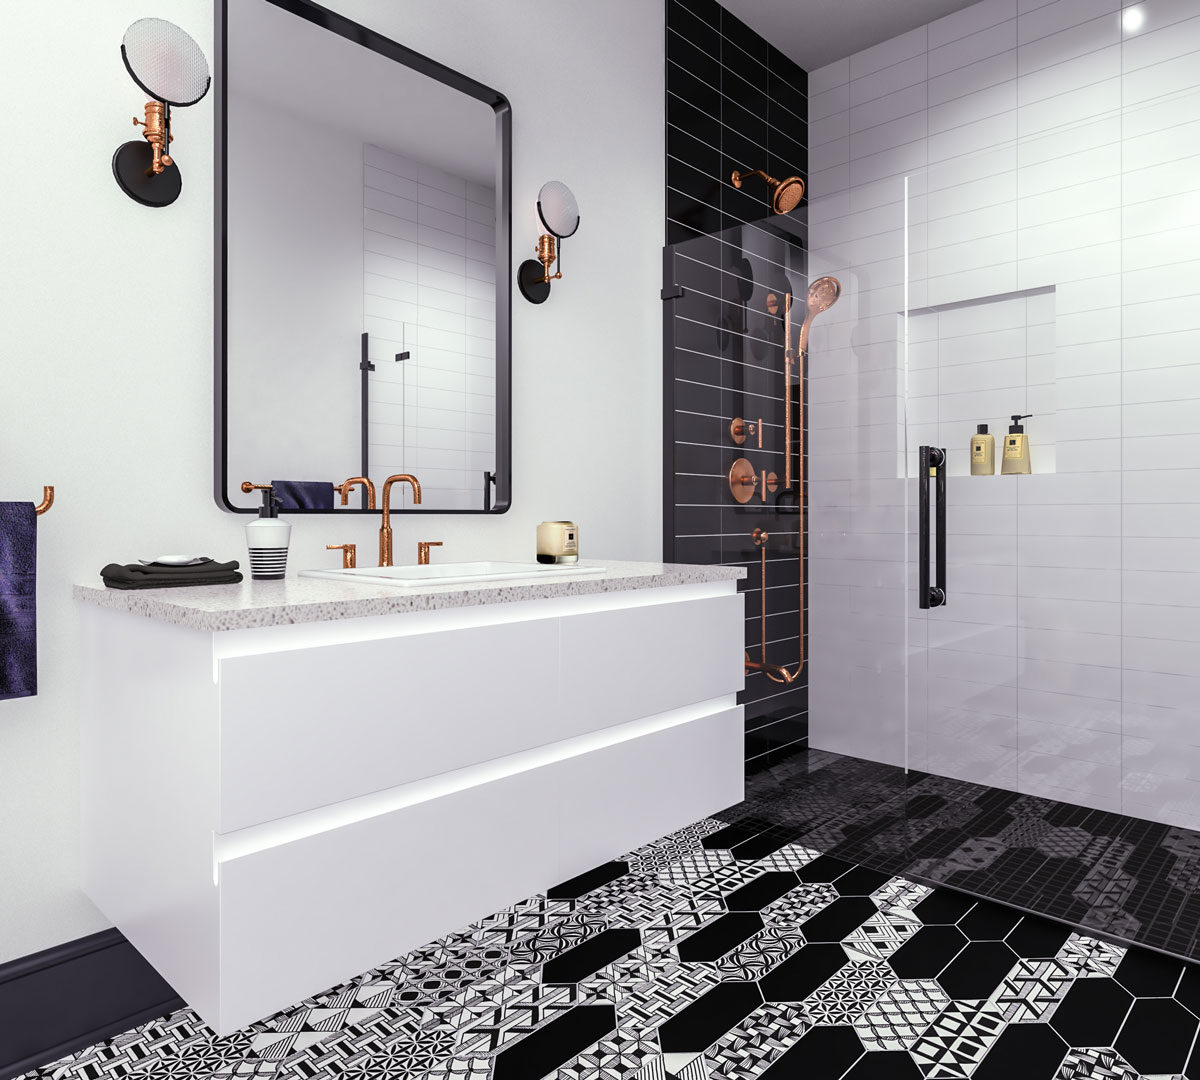 Kleinburg Residence - Bathroom Design. Image © Unfold Creative Studio Ltd.